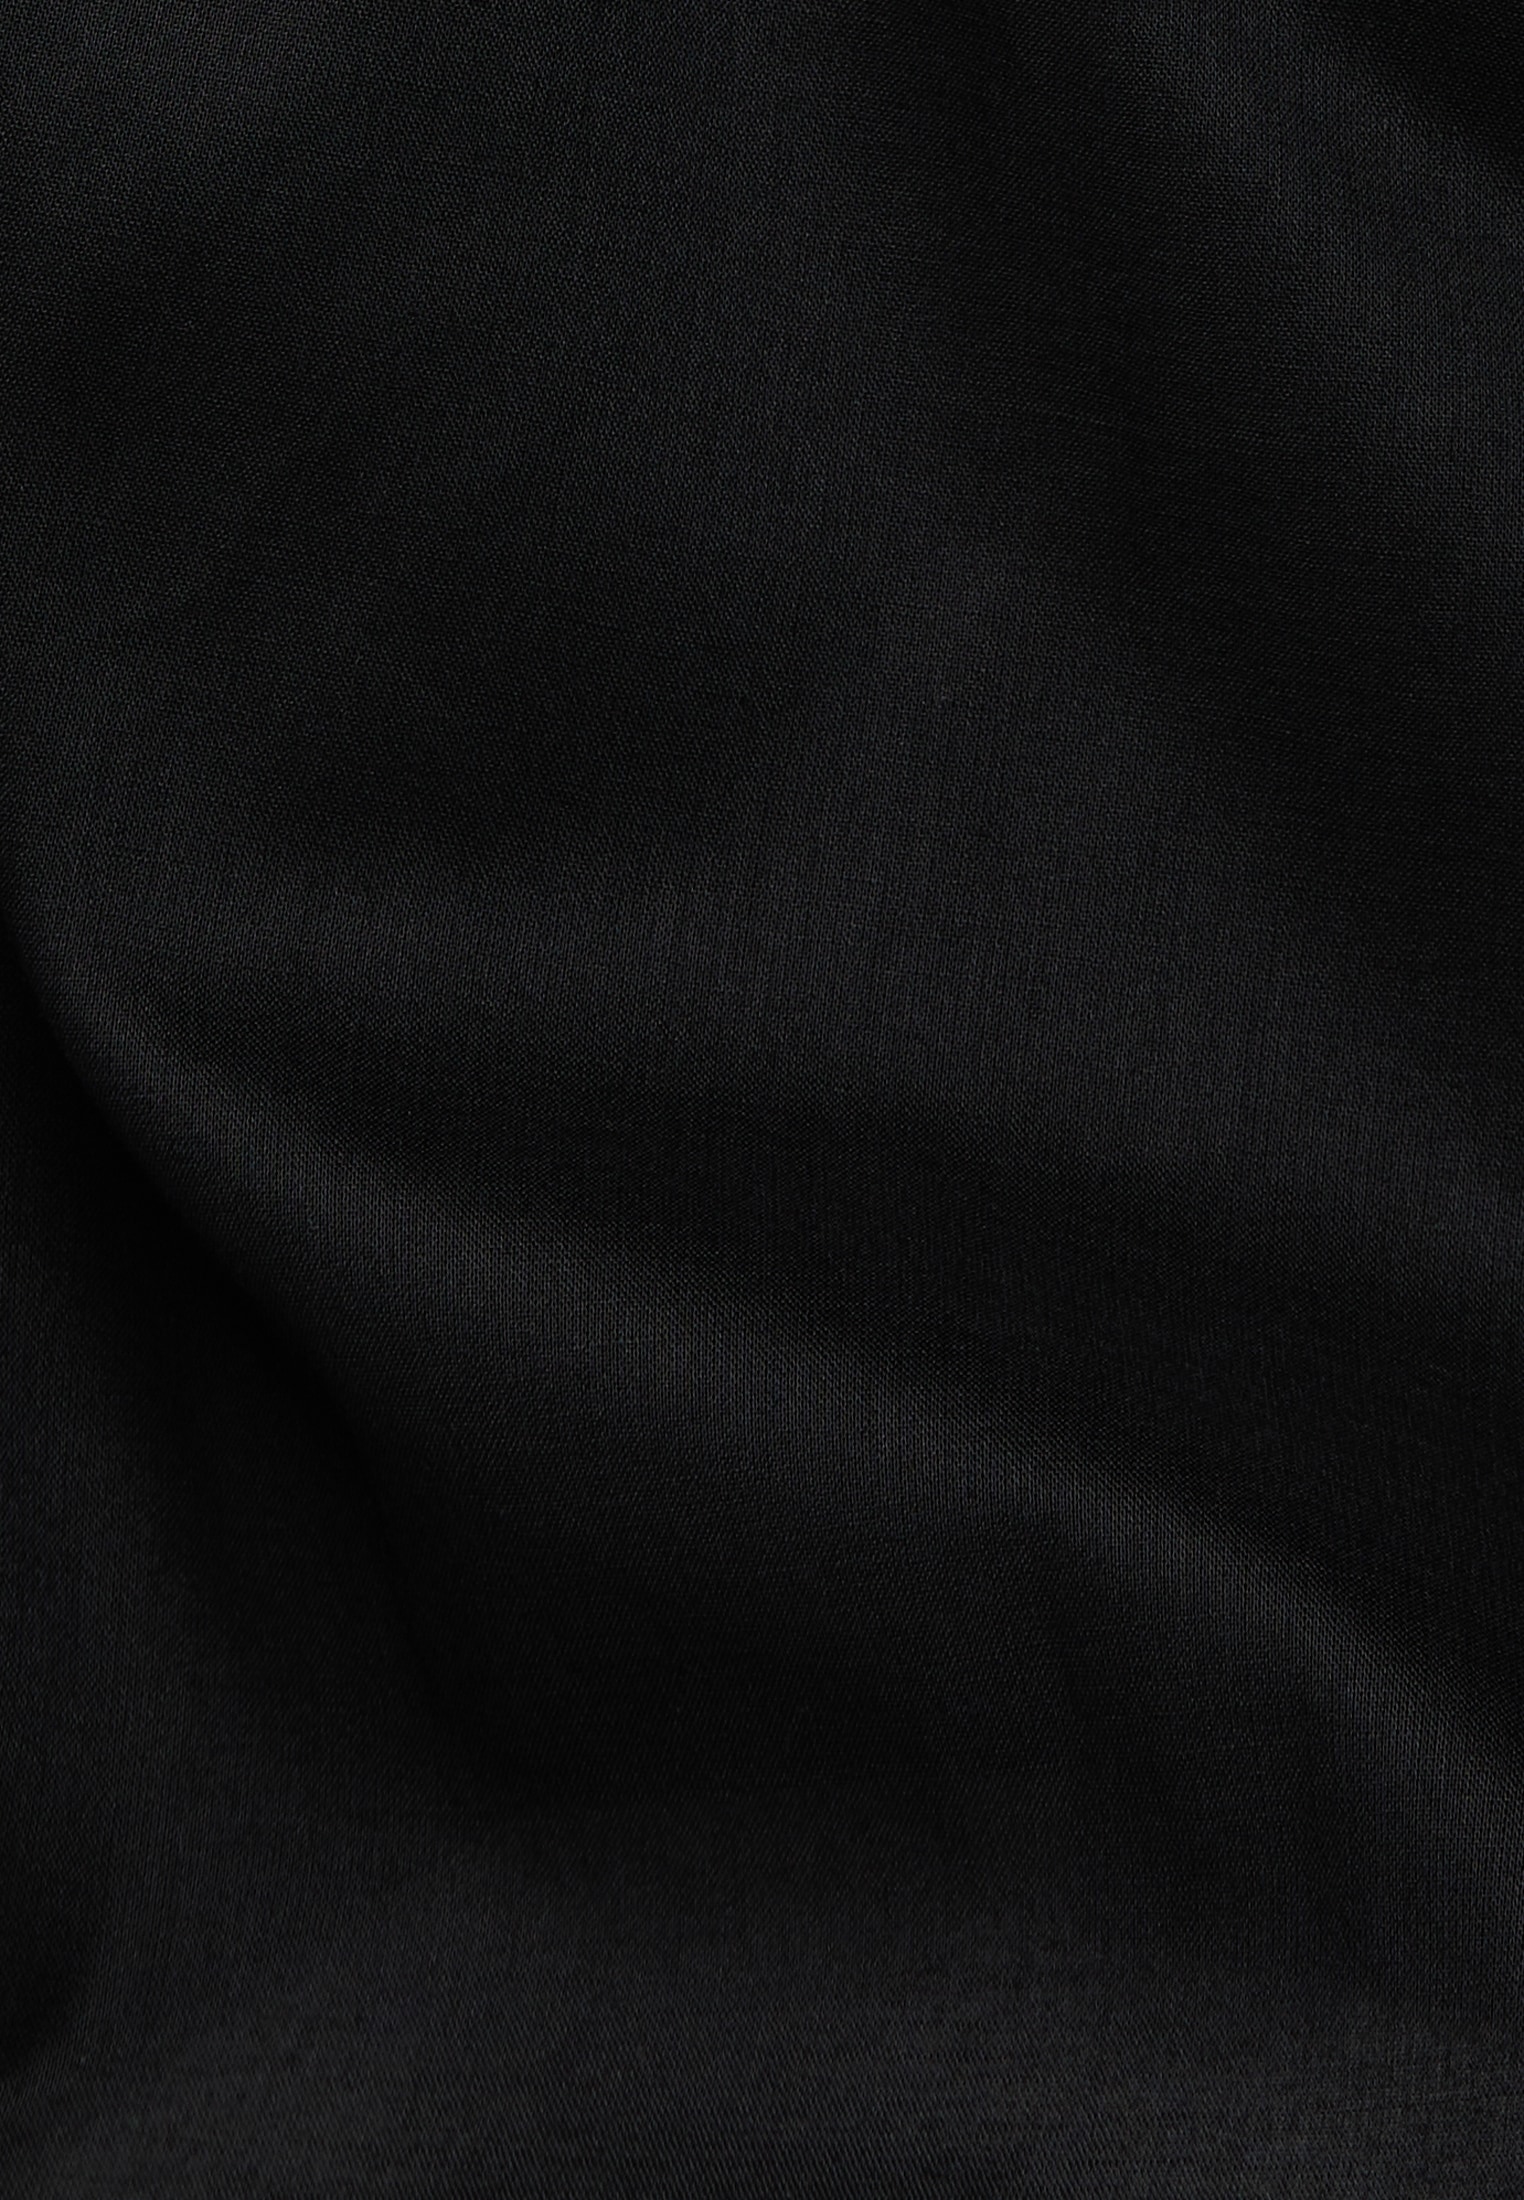 Tunika in schwarz unifarben